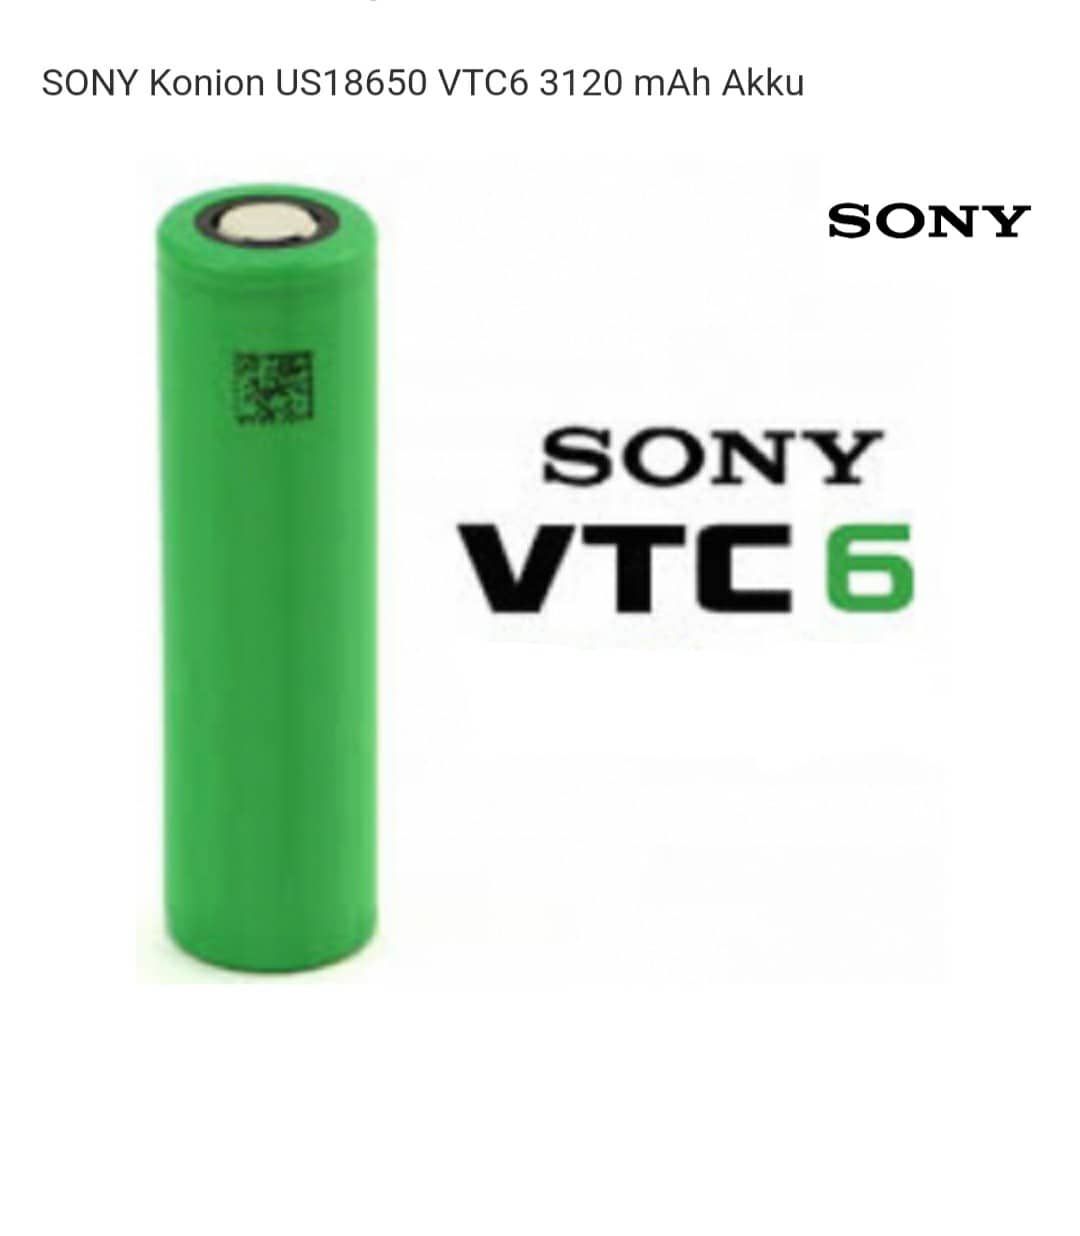 Sony Konion US 18650 VTC6 - 3000mAh